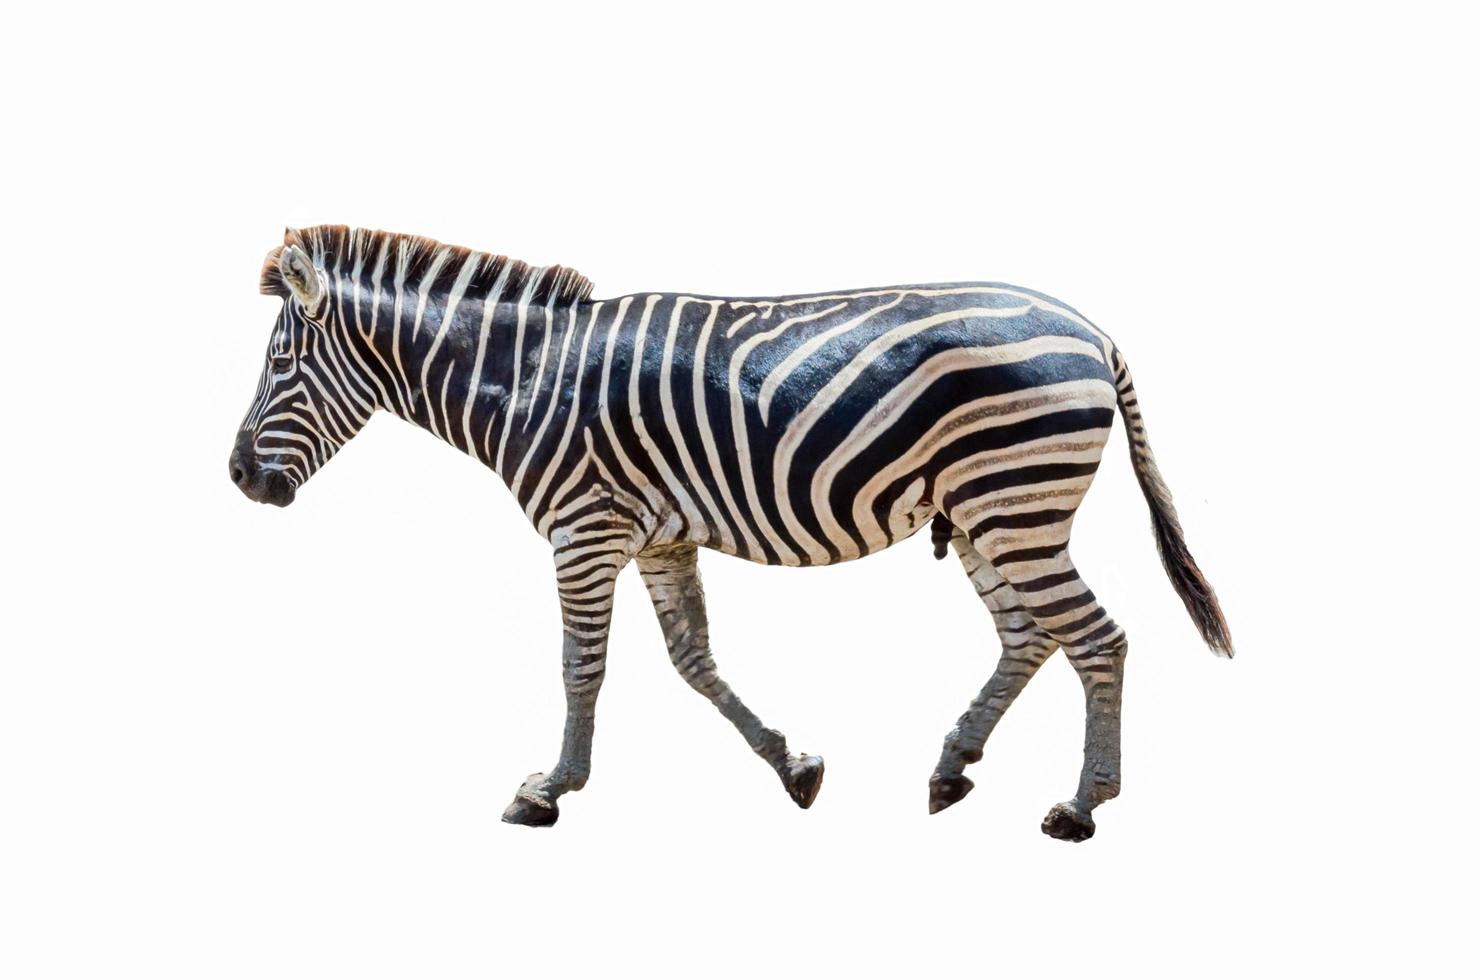 Zebra figurine on a white background photo